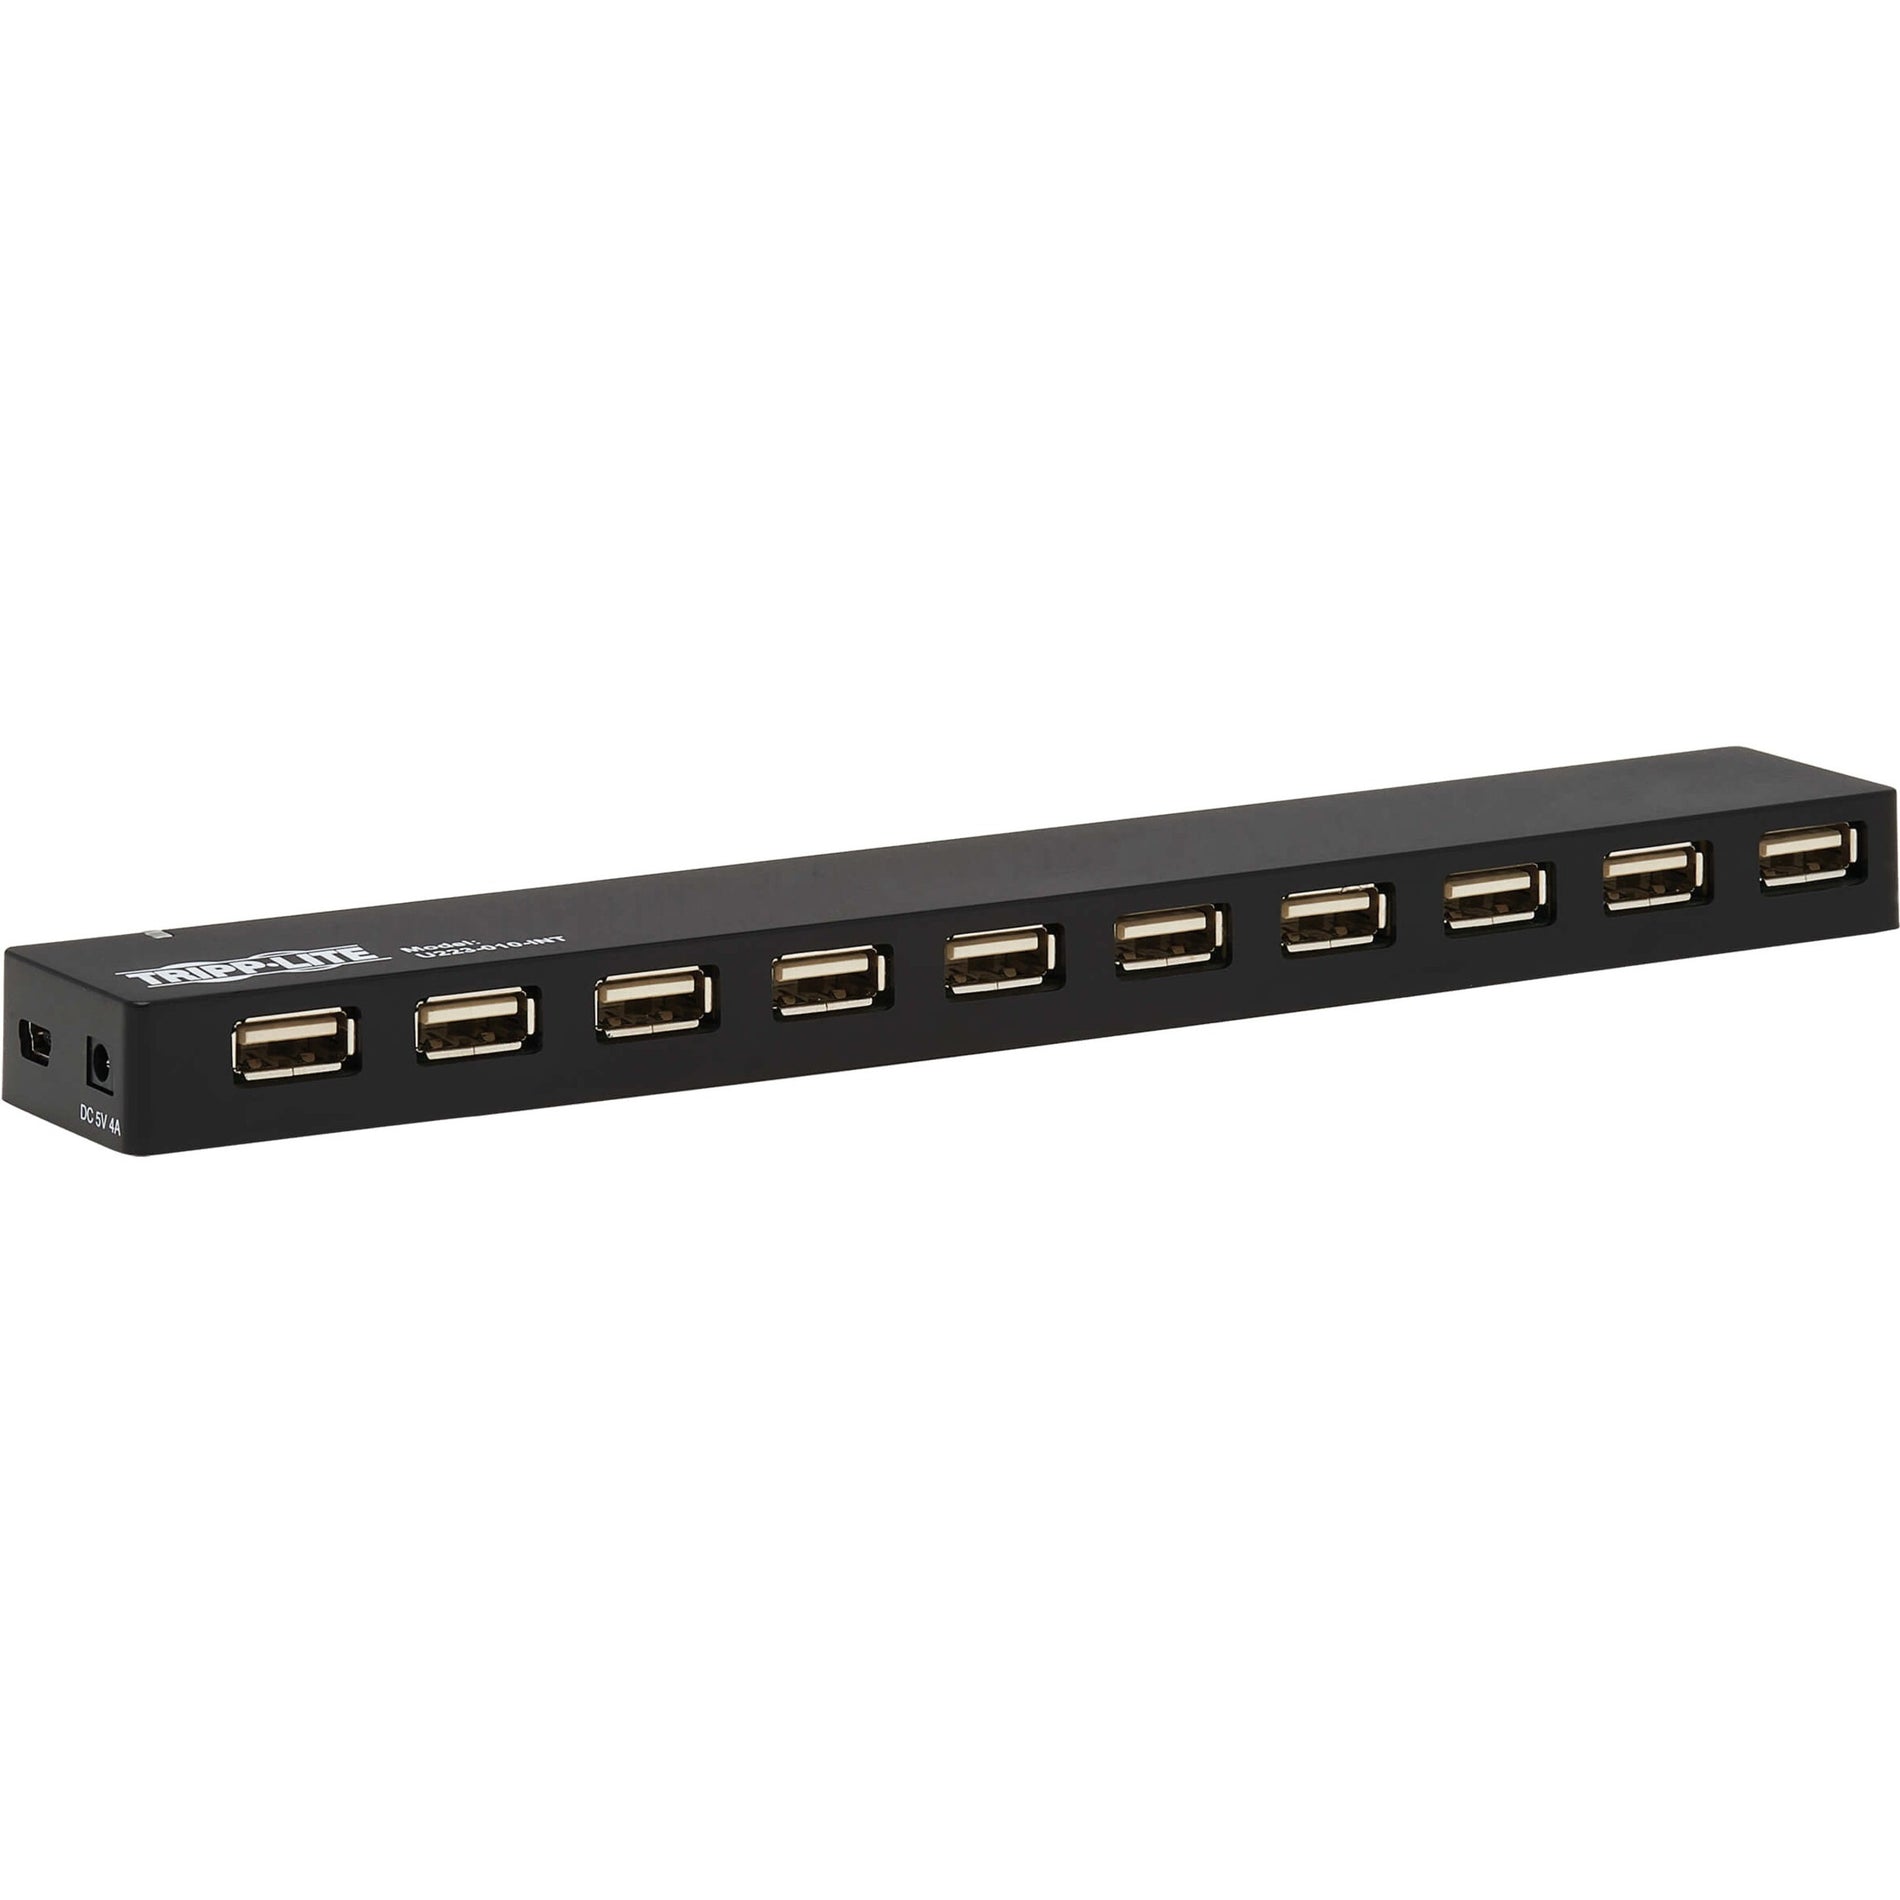 Tripp Lite U223-010-INT 10-Port USB Hub with Power Supply and International Plug Adapters, USB 2.0 Type A, Mac/PC Compatible